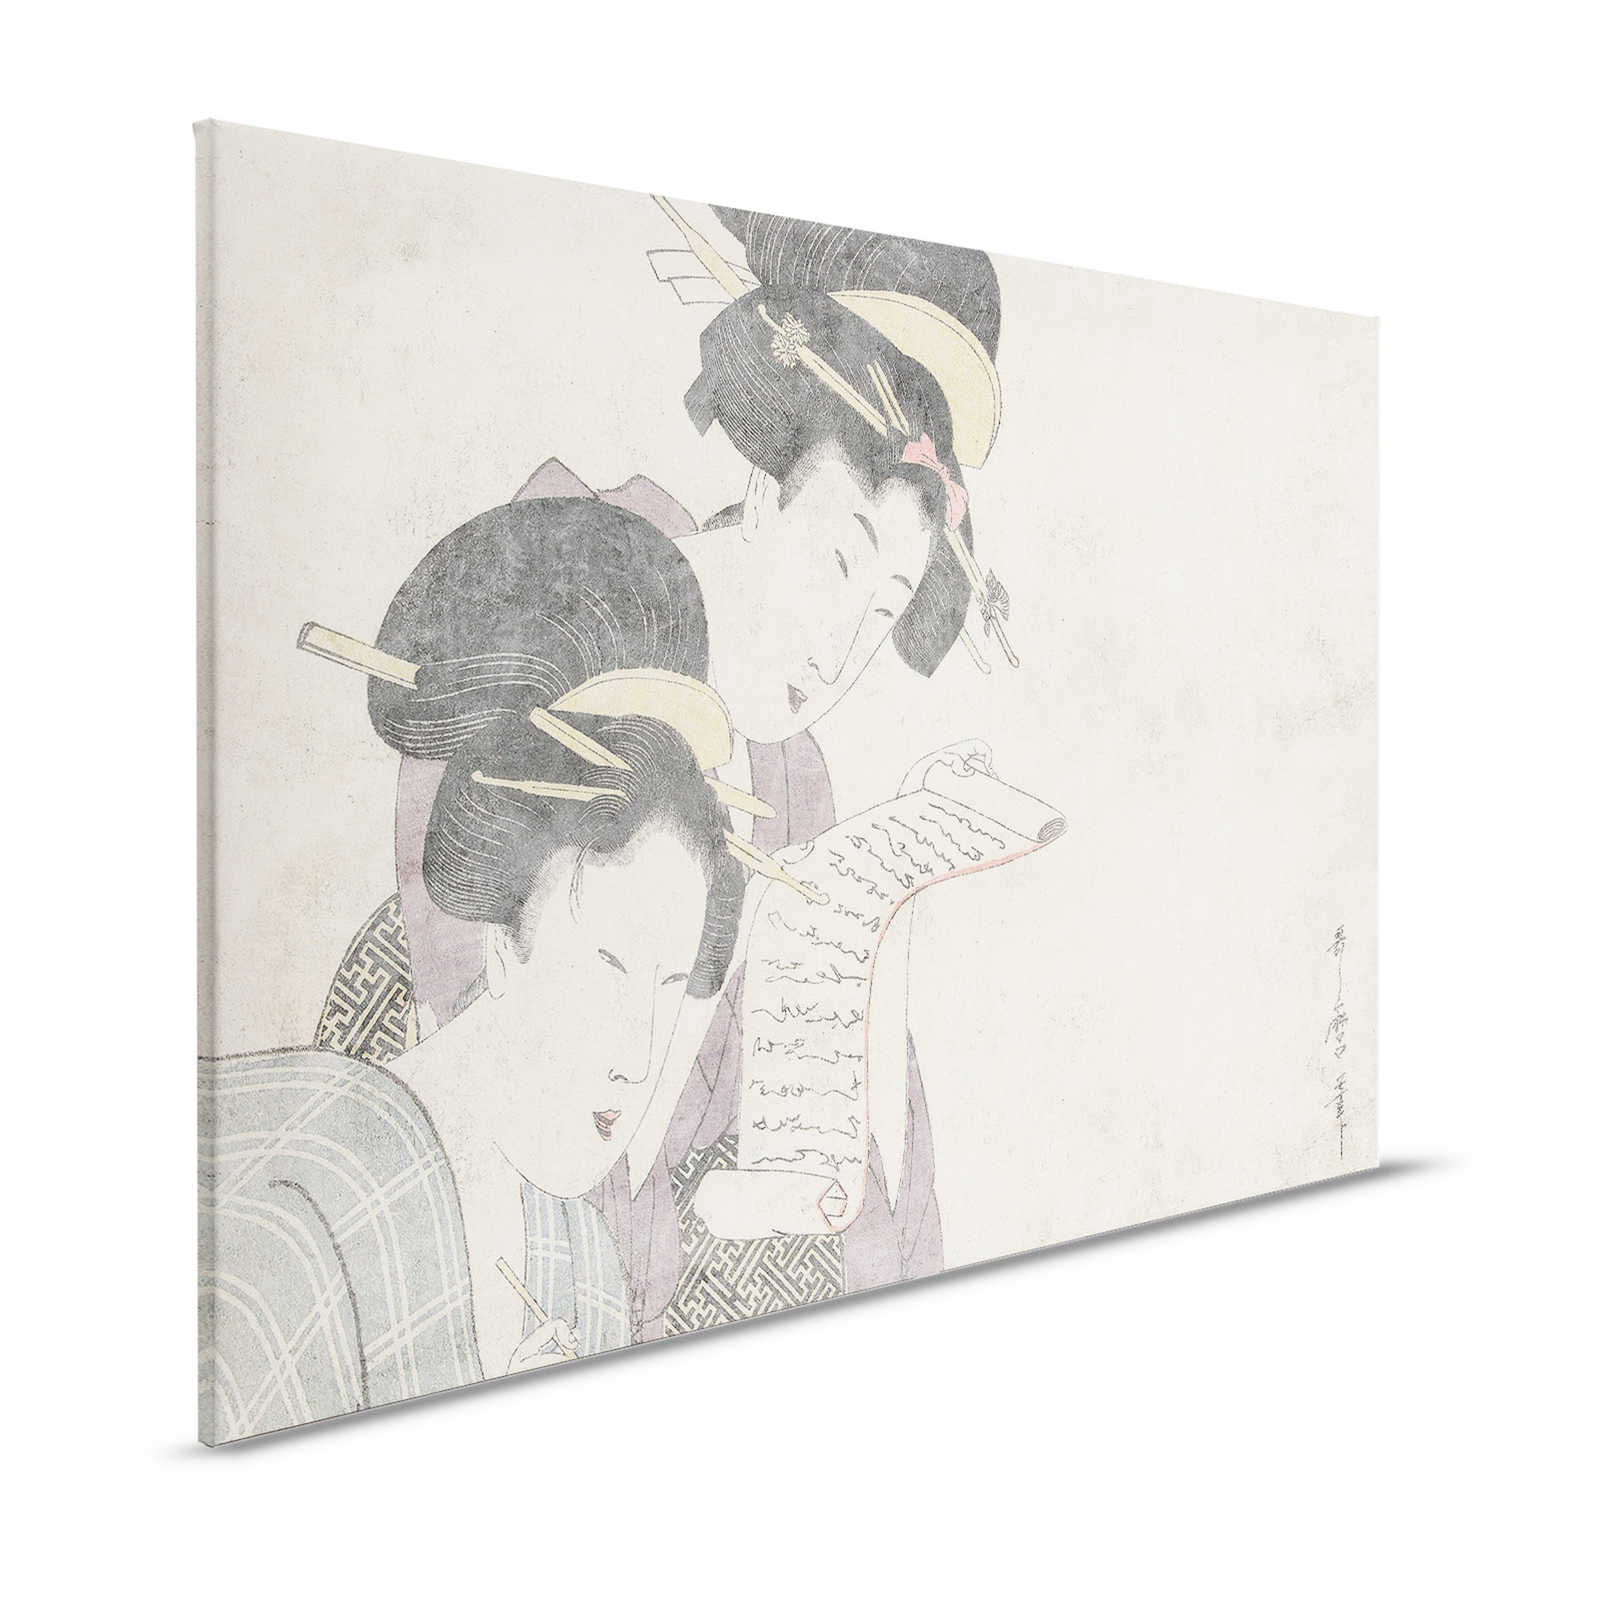 Osaka 3 - Lienzo Asiático Dibujo Vintage y Textura de Yeso - 1.20 m x 0.80 m
